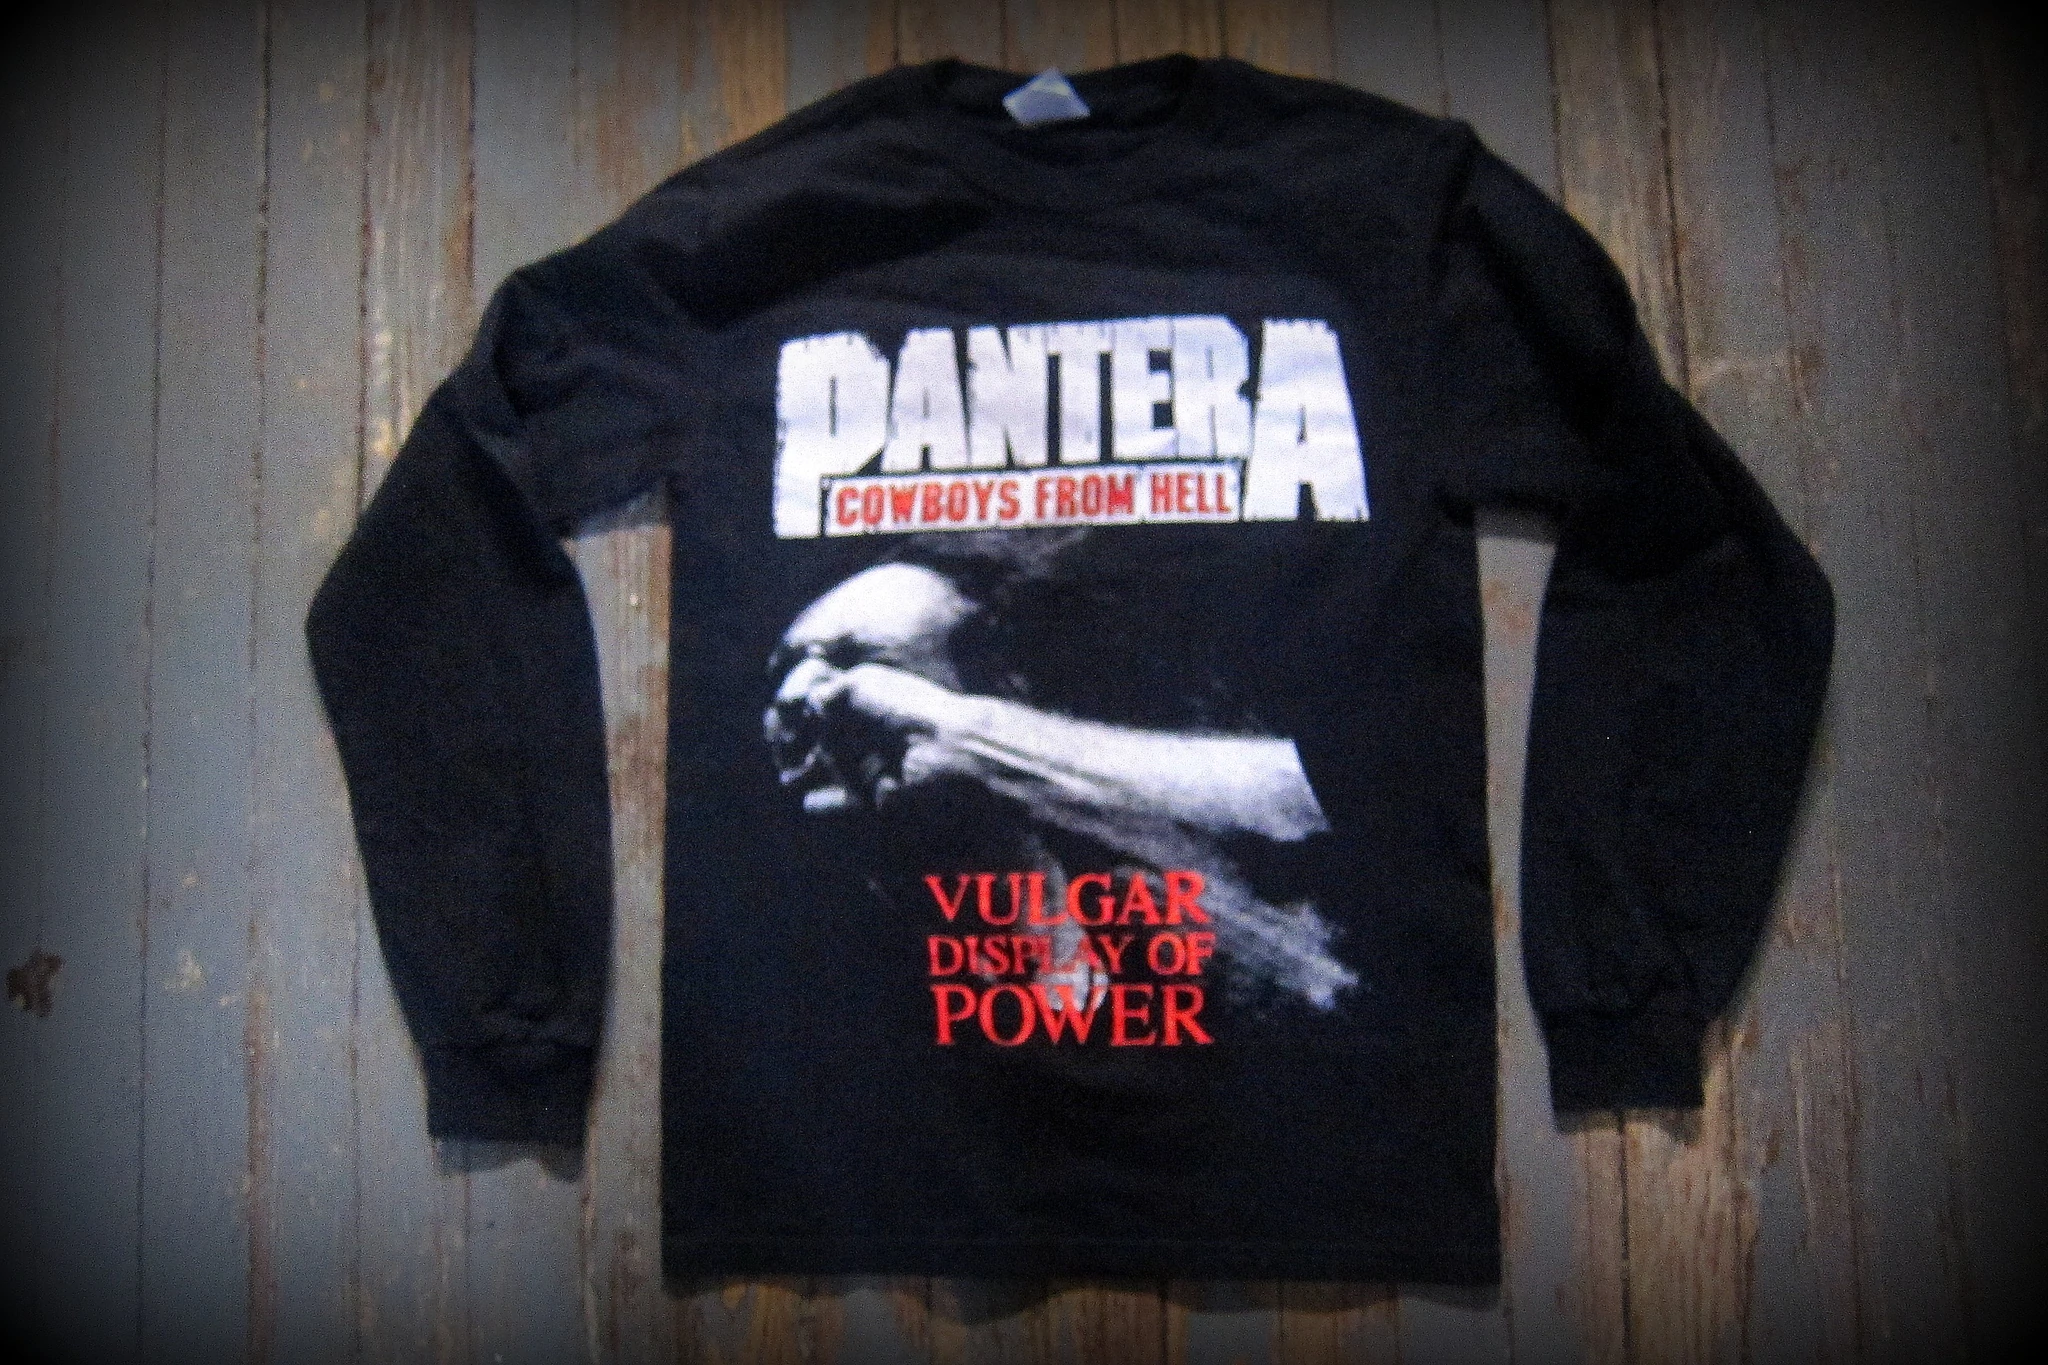 PANTERA - Vulgar Display Of Power - Two Sided Printed- Unisex Long Sleeve Shirt.